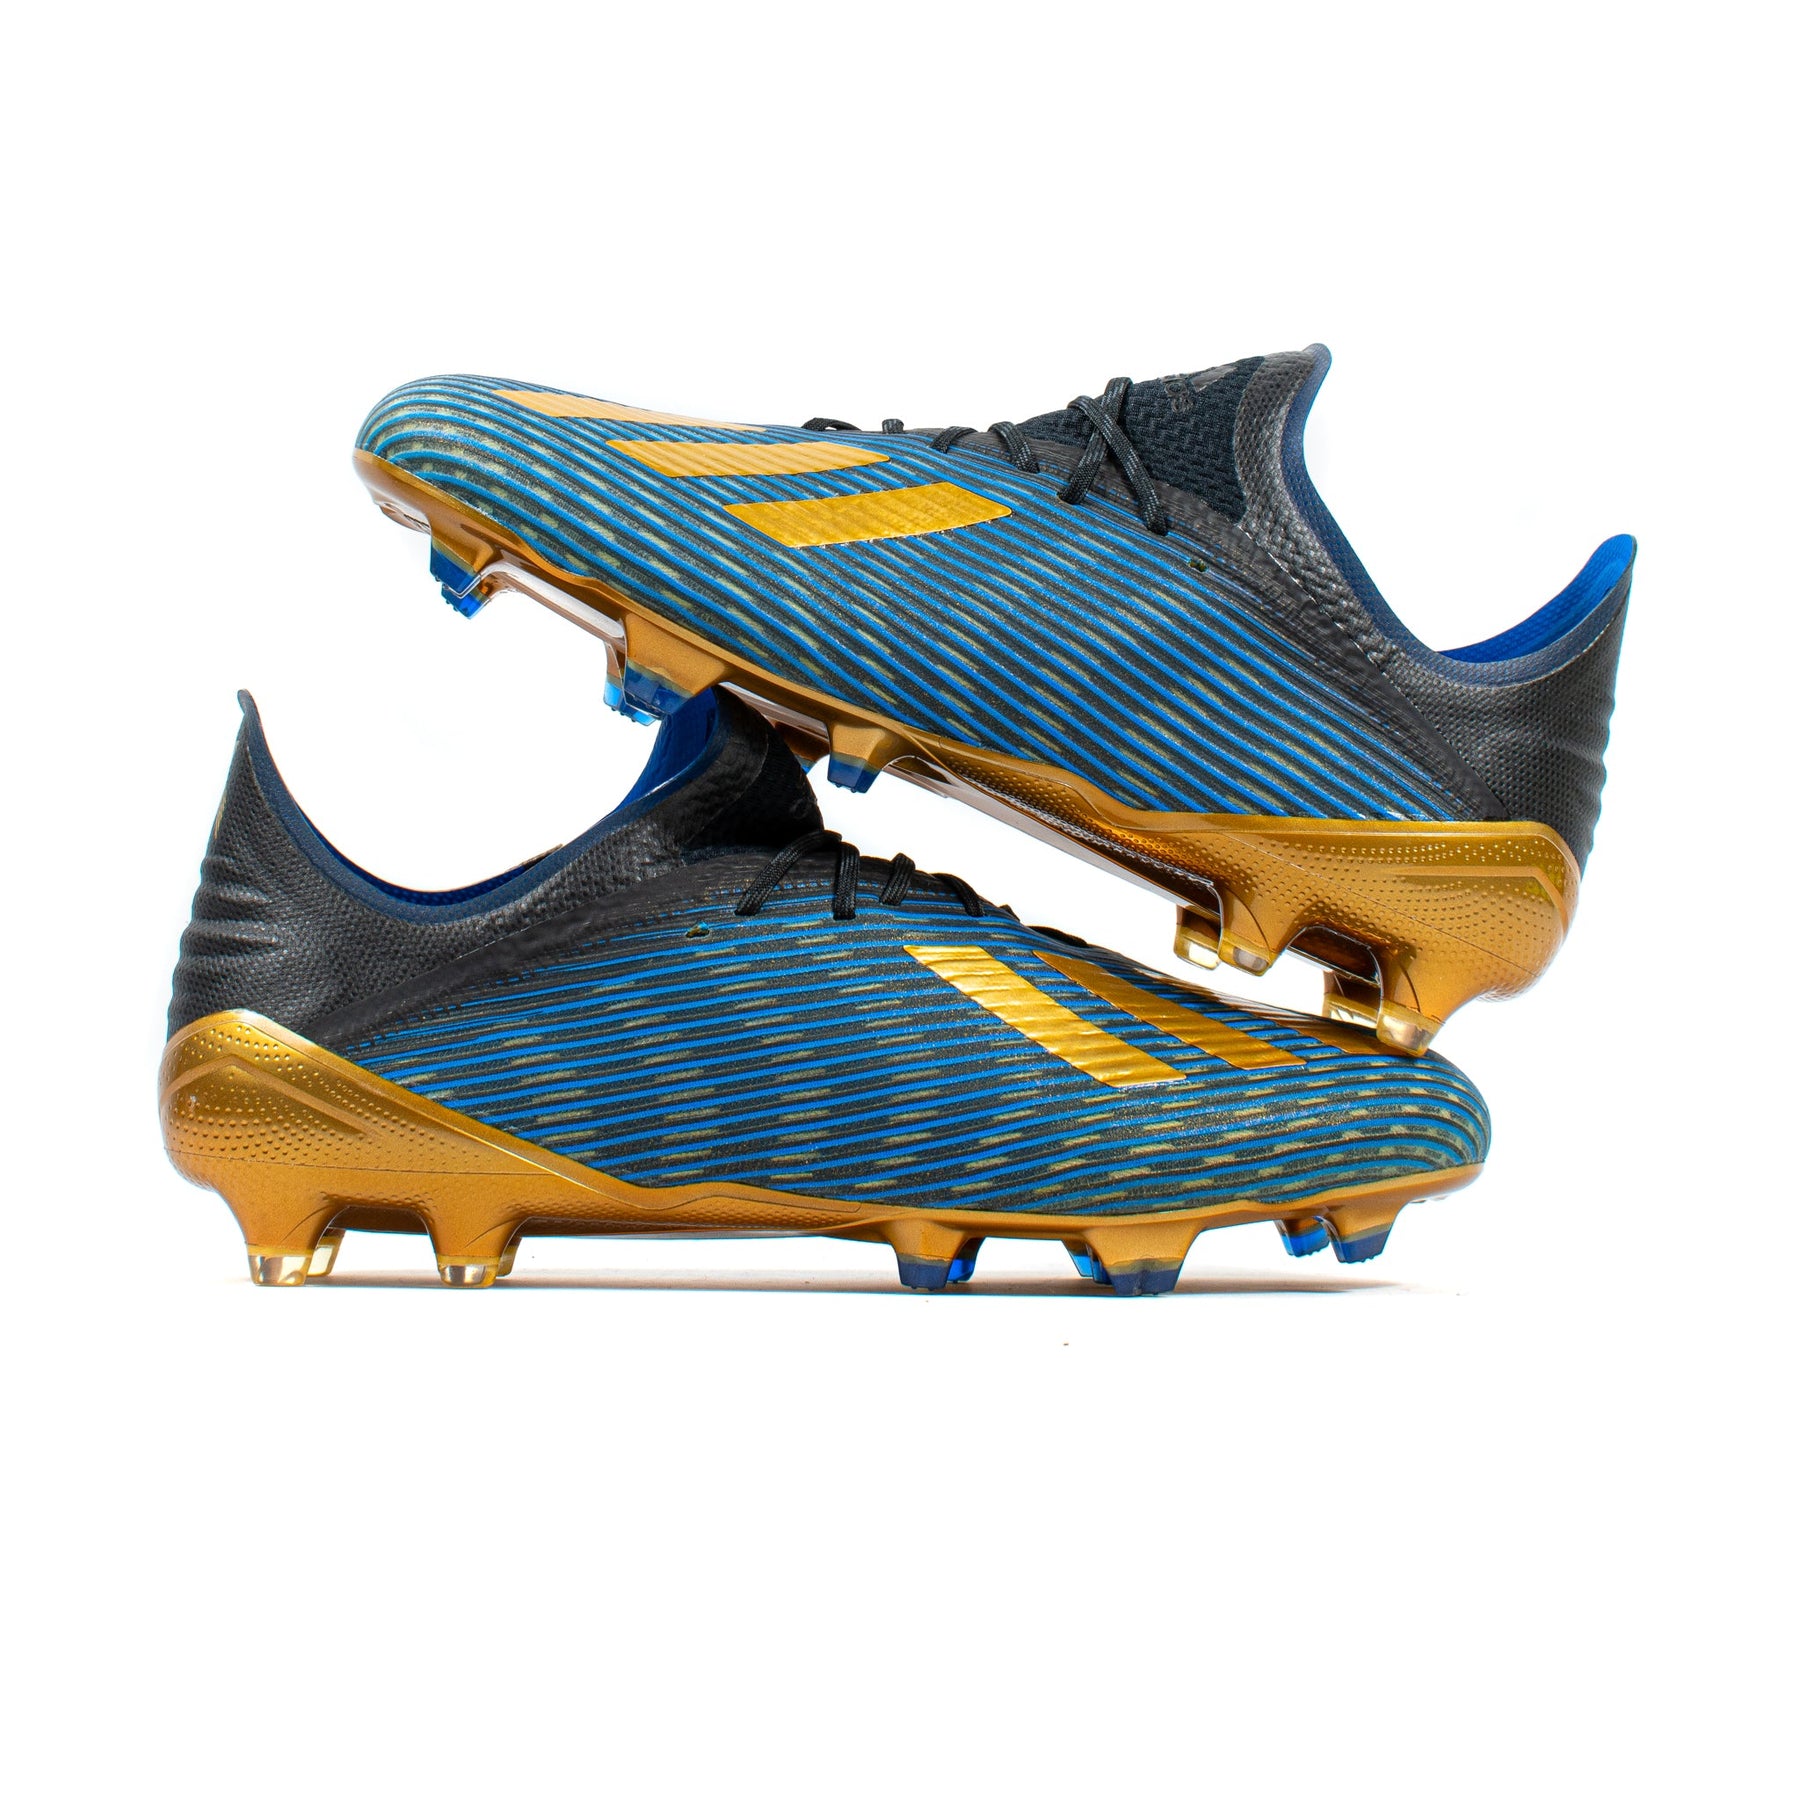 Adidas X19.1 Blue Gold FG – Classic Soccer Cleats